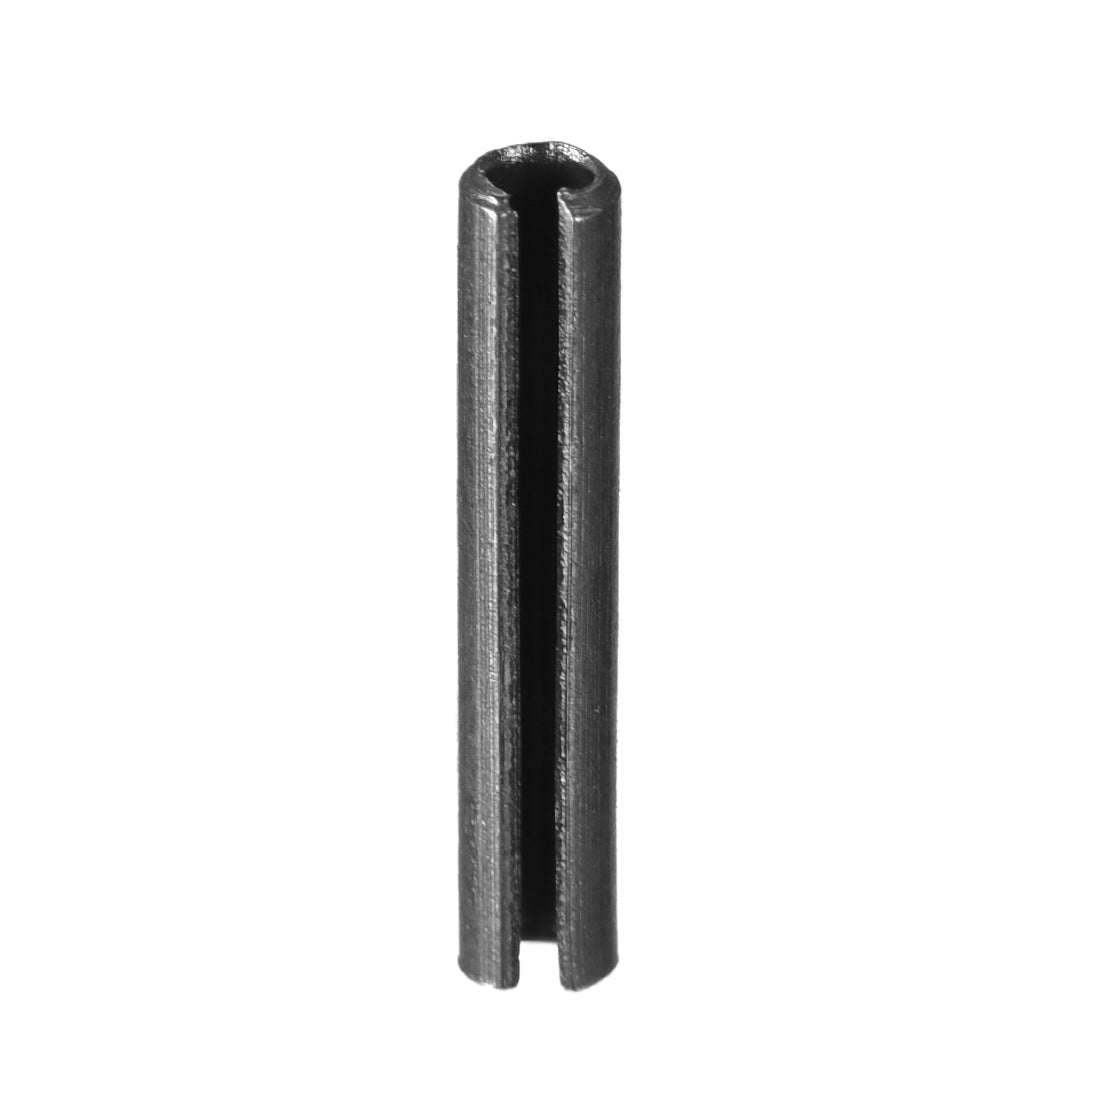 uxcell Uxcell 2.3mm x 12mm Dowel Pin Carbon Steel Split Spring Roll Shelf Support Pin Fasten Hardware Black 20 Pcs